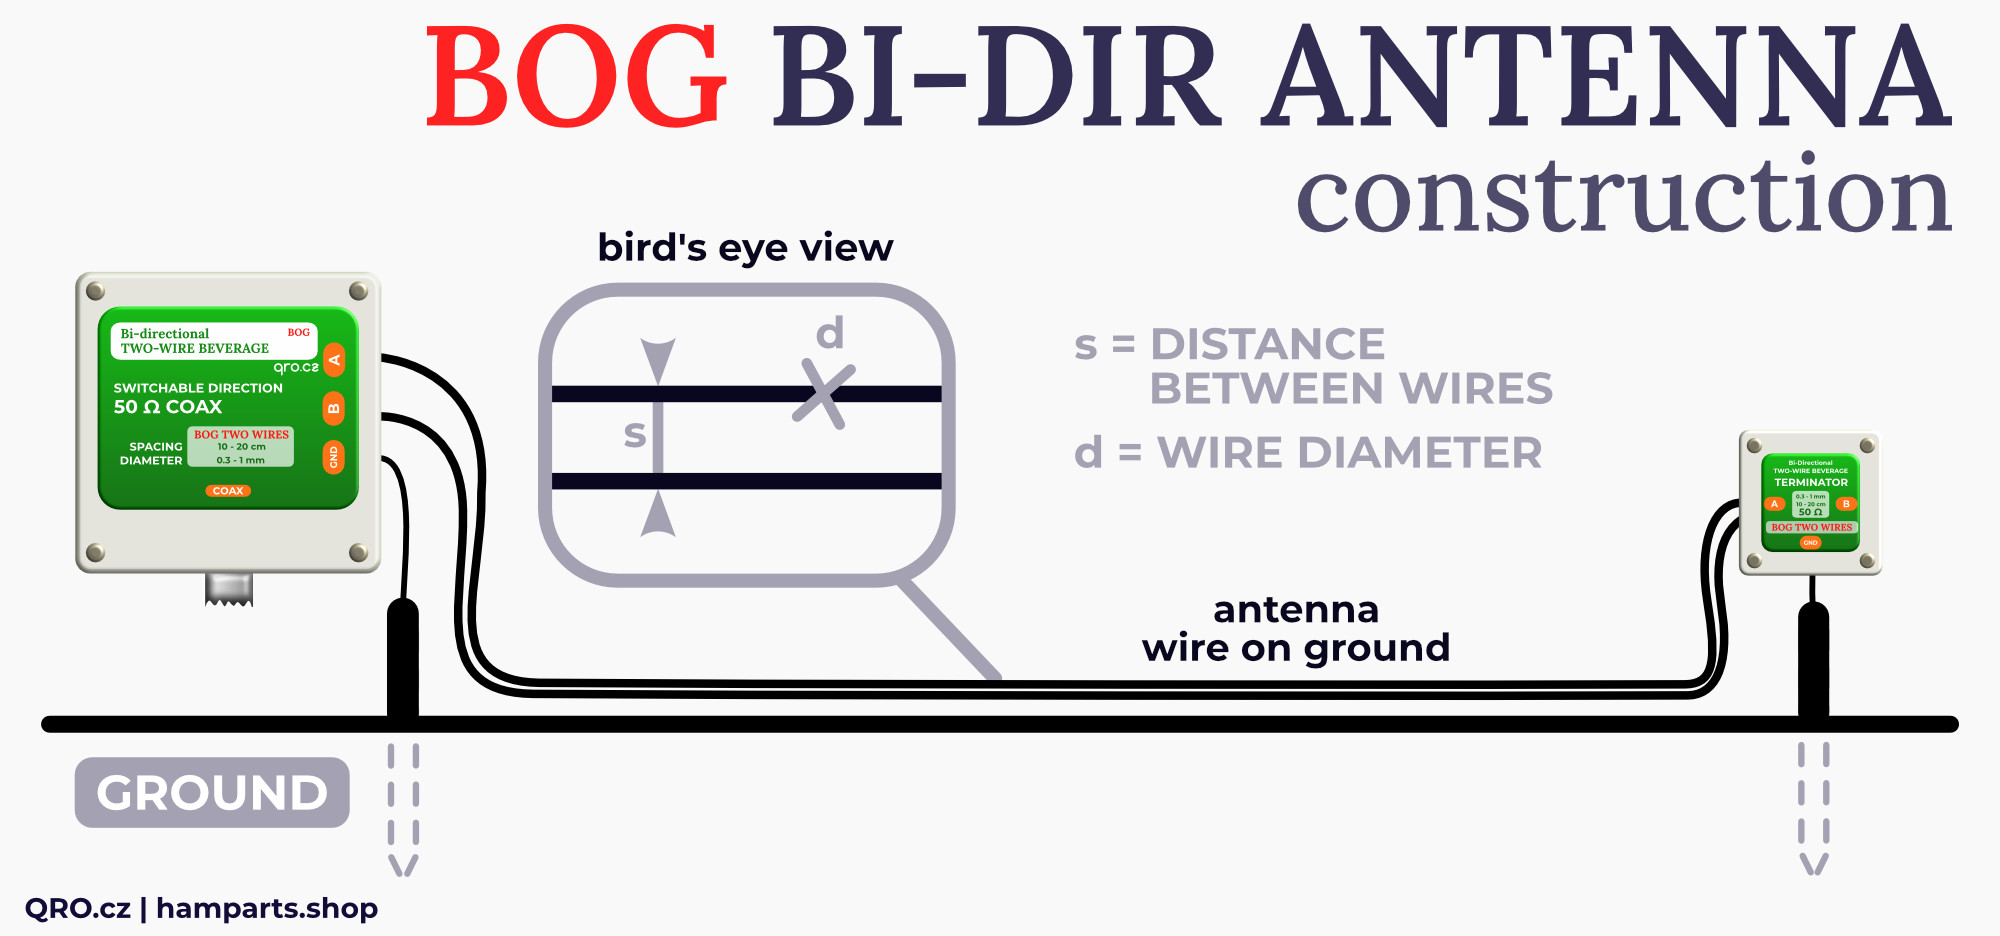 bi-directional beverage antenna construction by qro.cz hampart.shop